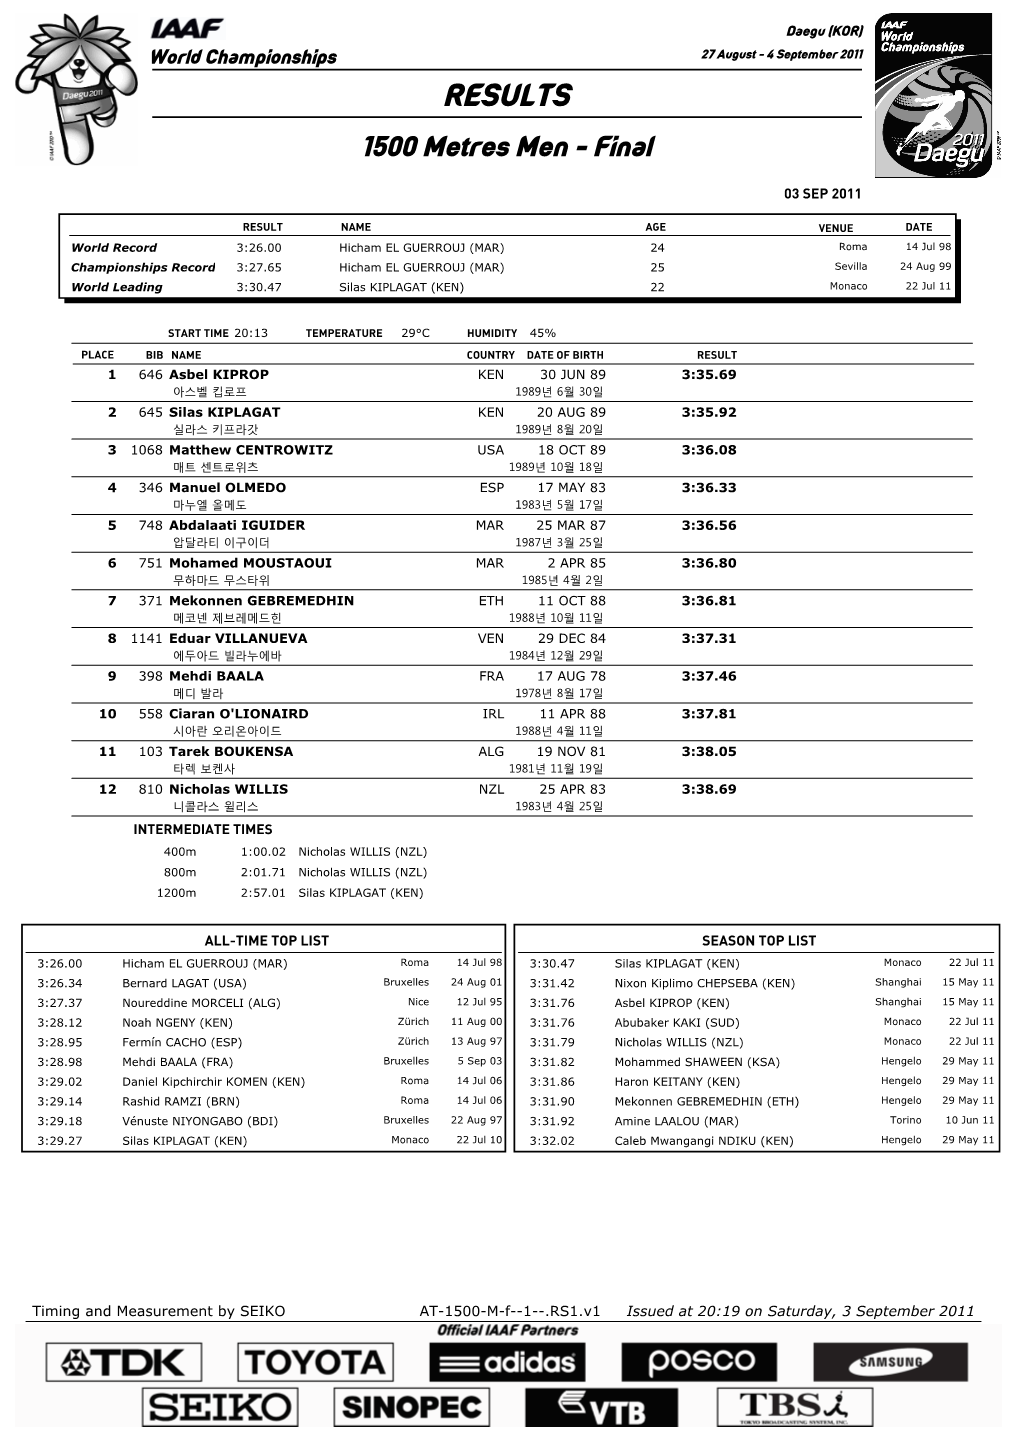 RESULTS 1500 Metres Men - Final